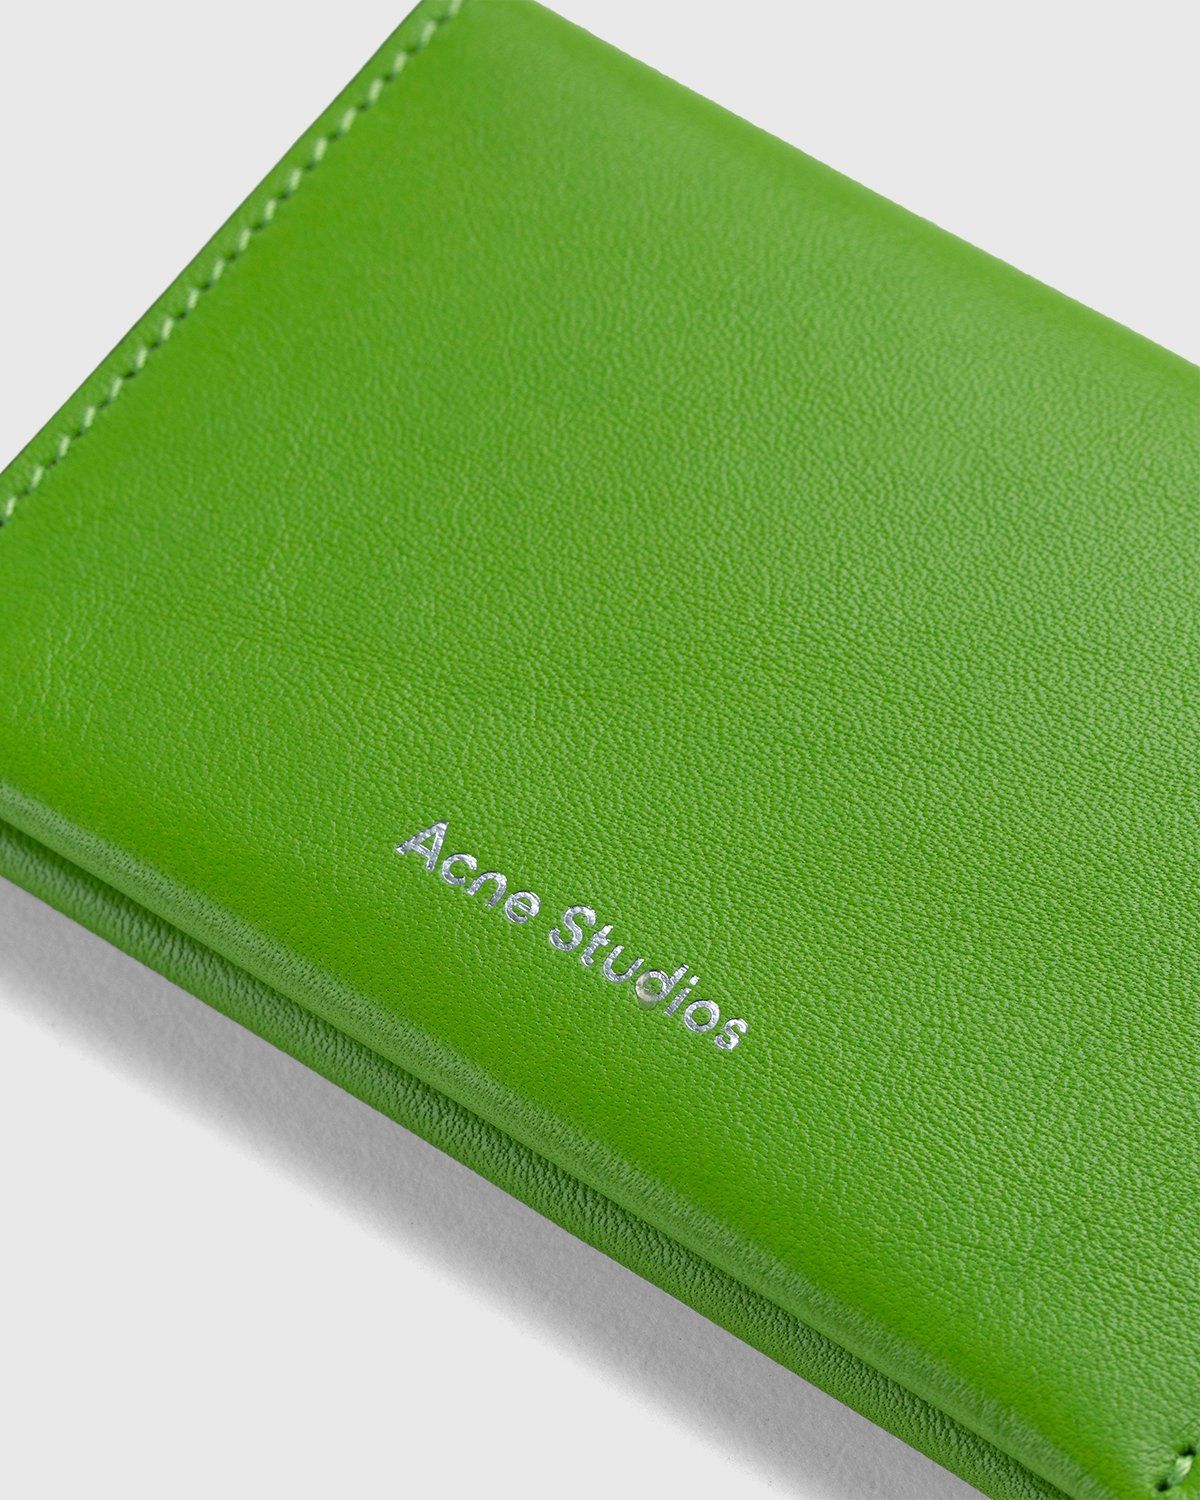 Acne Studios – Leather Card Case Multi Green - Image 3